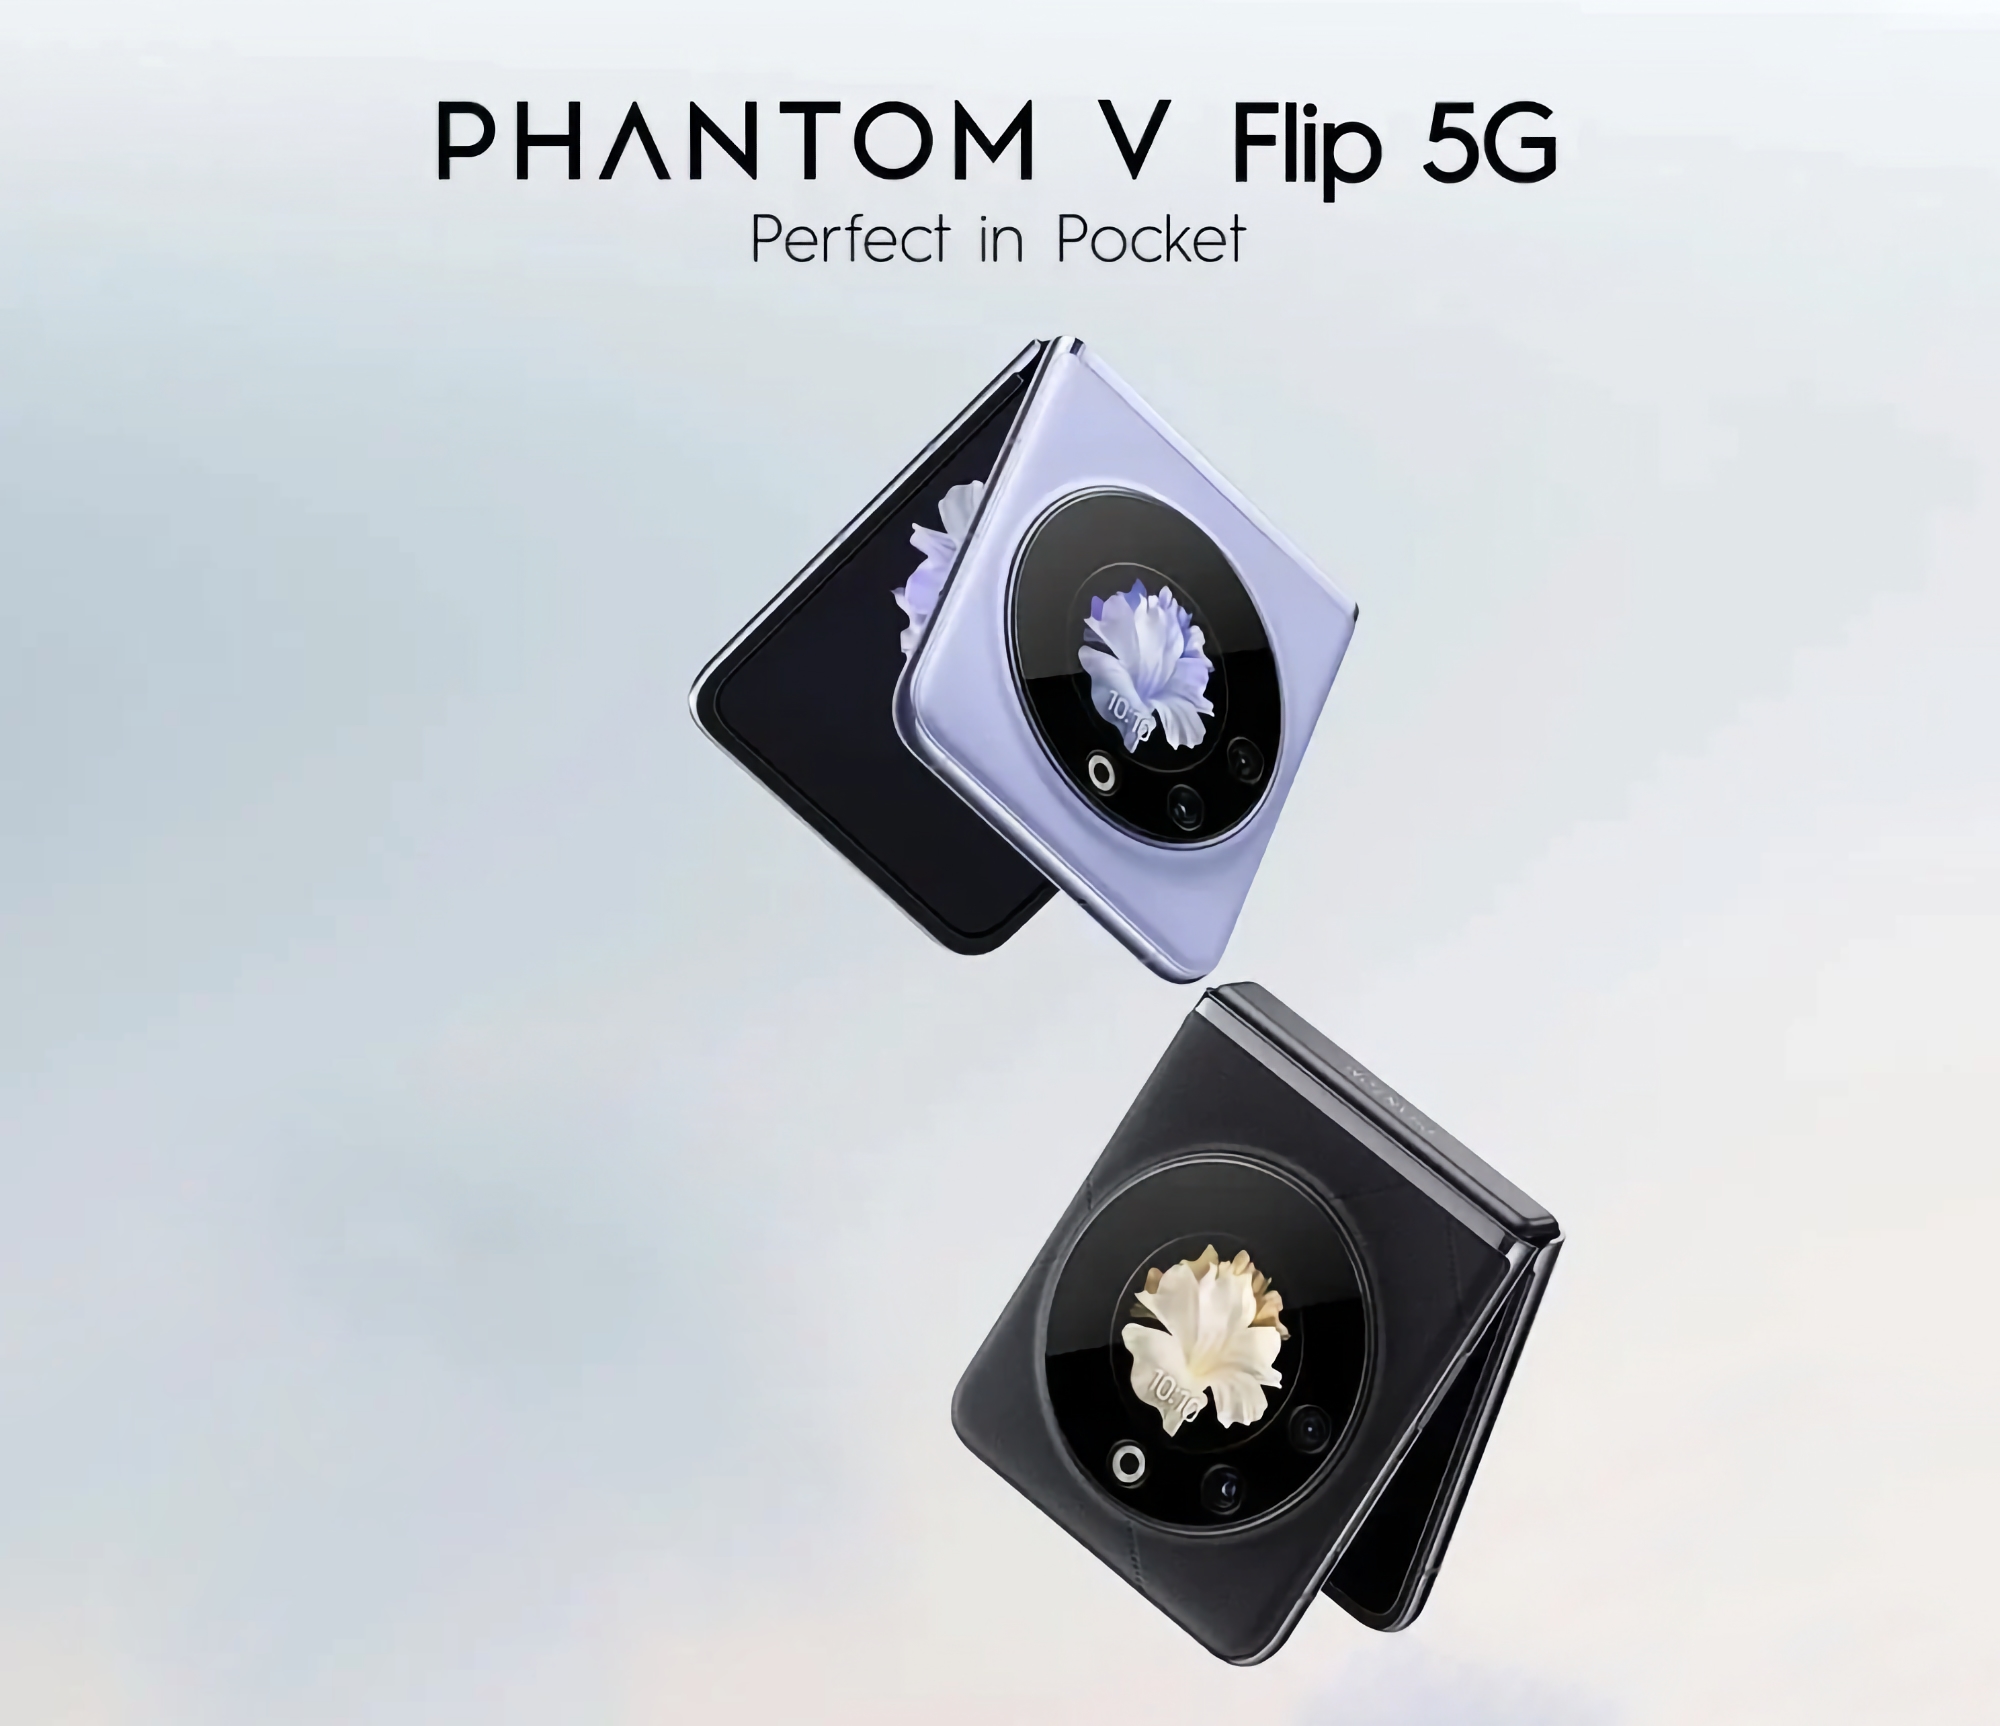 Product: Phantom V Flip